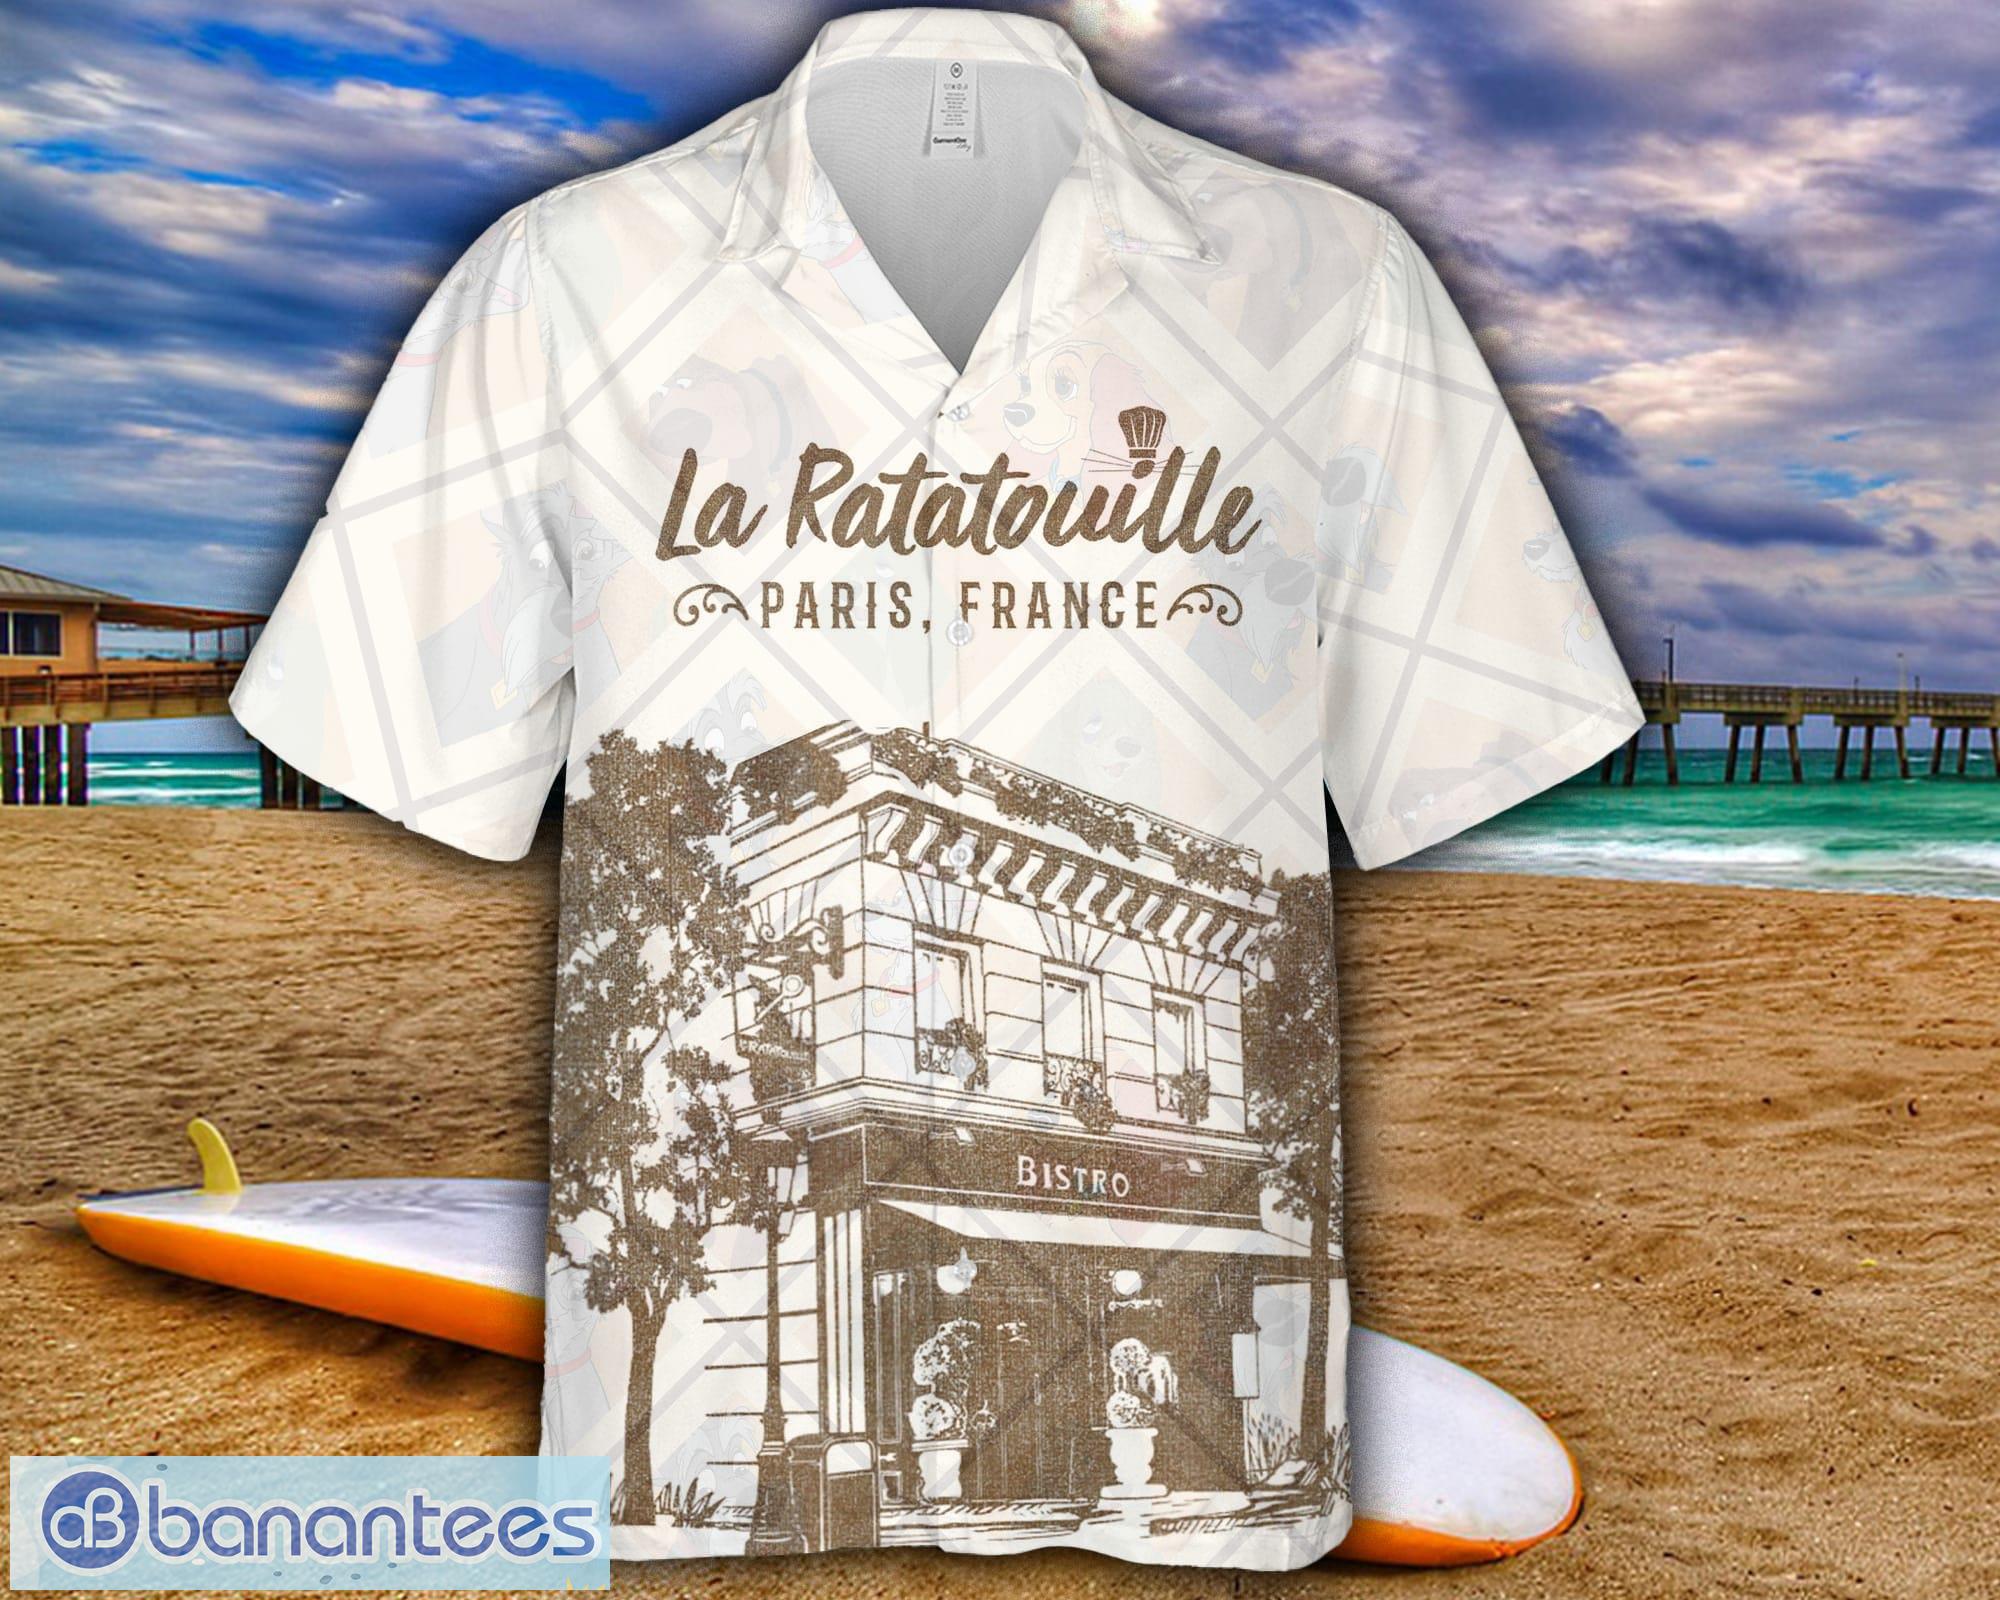 Brasserie Paris T-Shirt